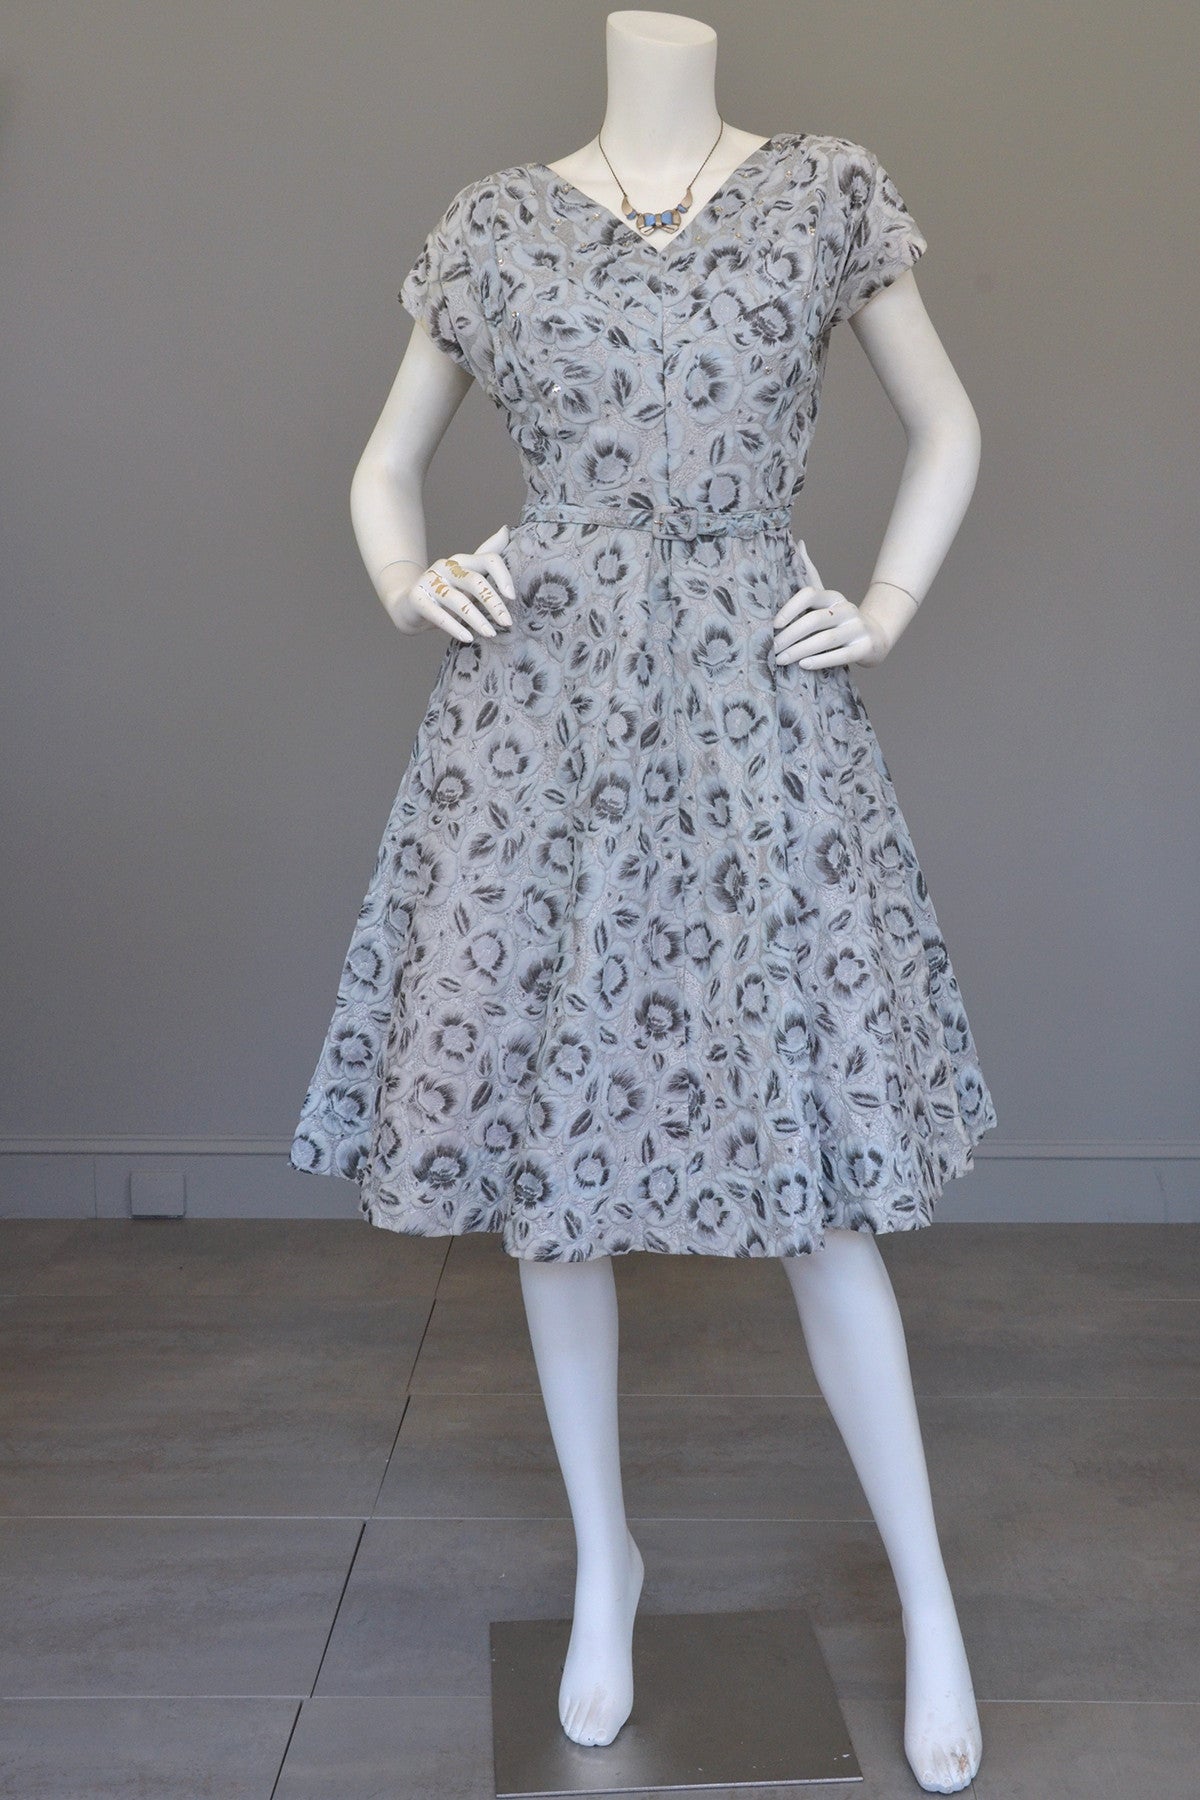 VTG R&K Original Dress 50s Polished Cotton Day/Party Blue Floral M/L W –  The Best Vintage Clothing